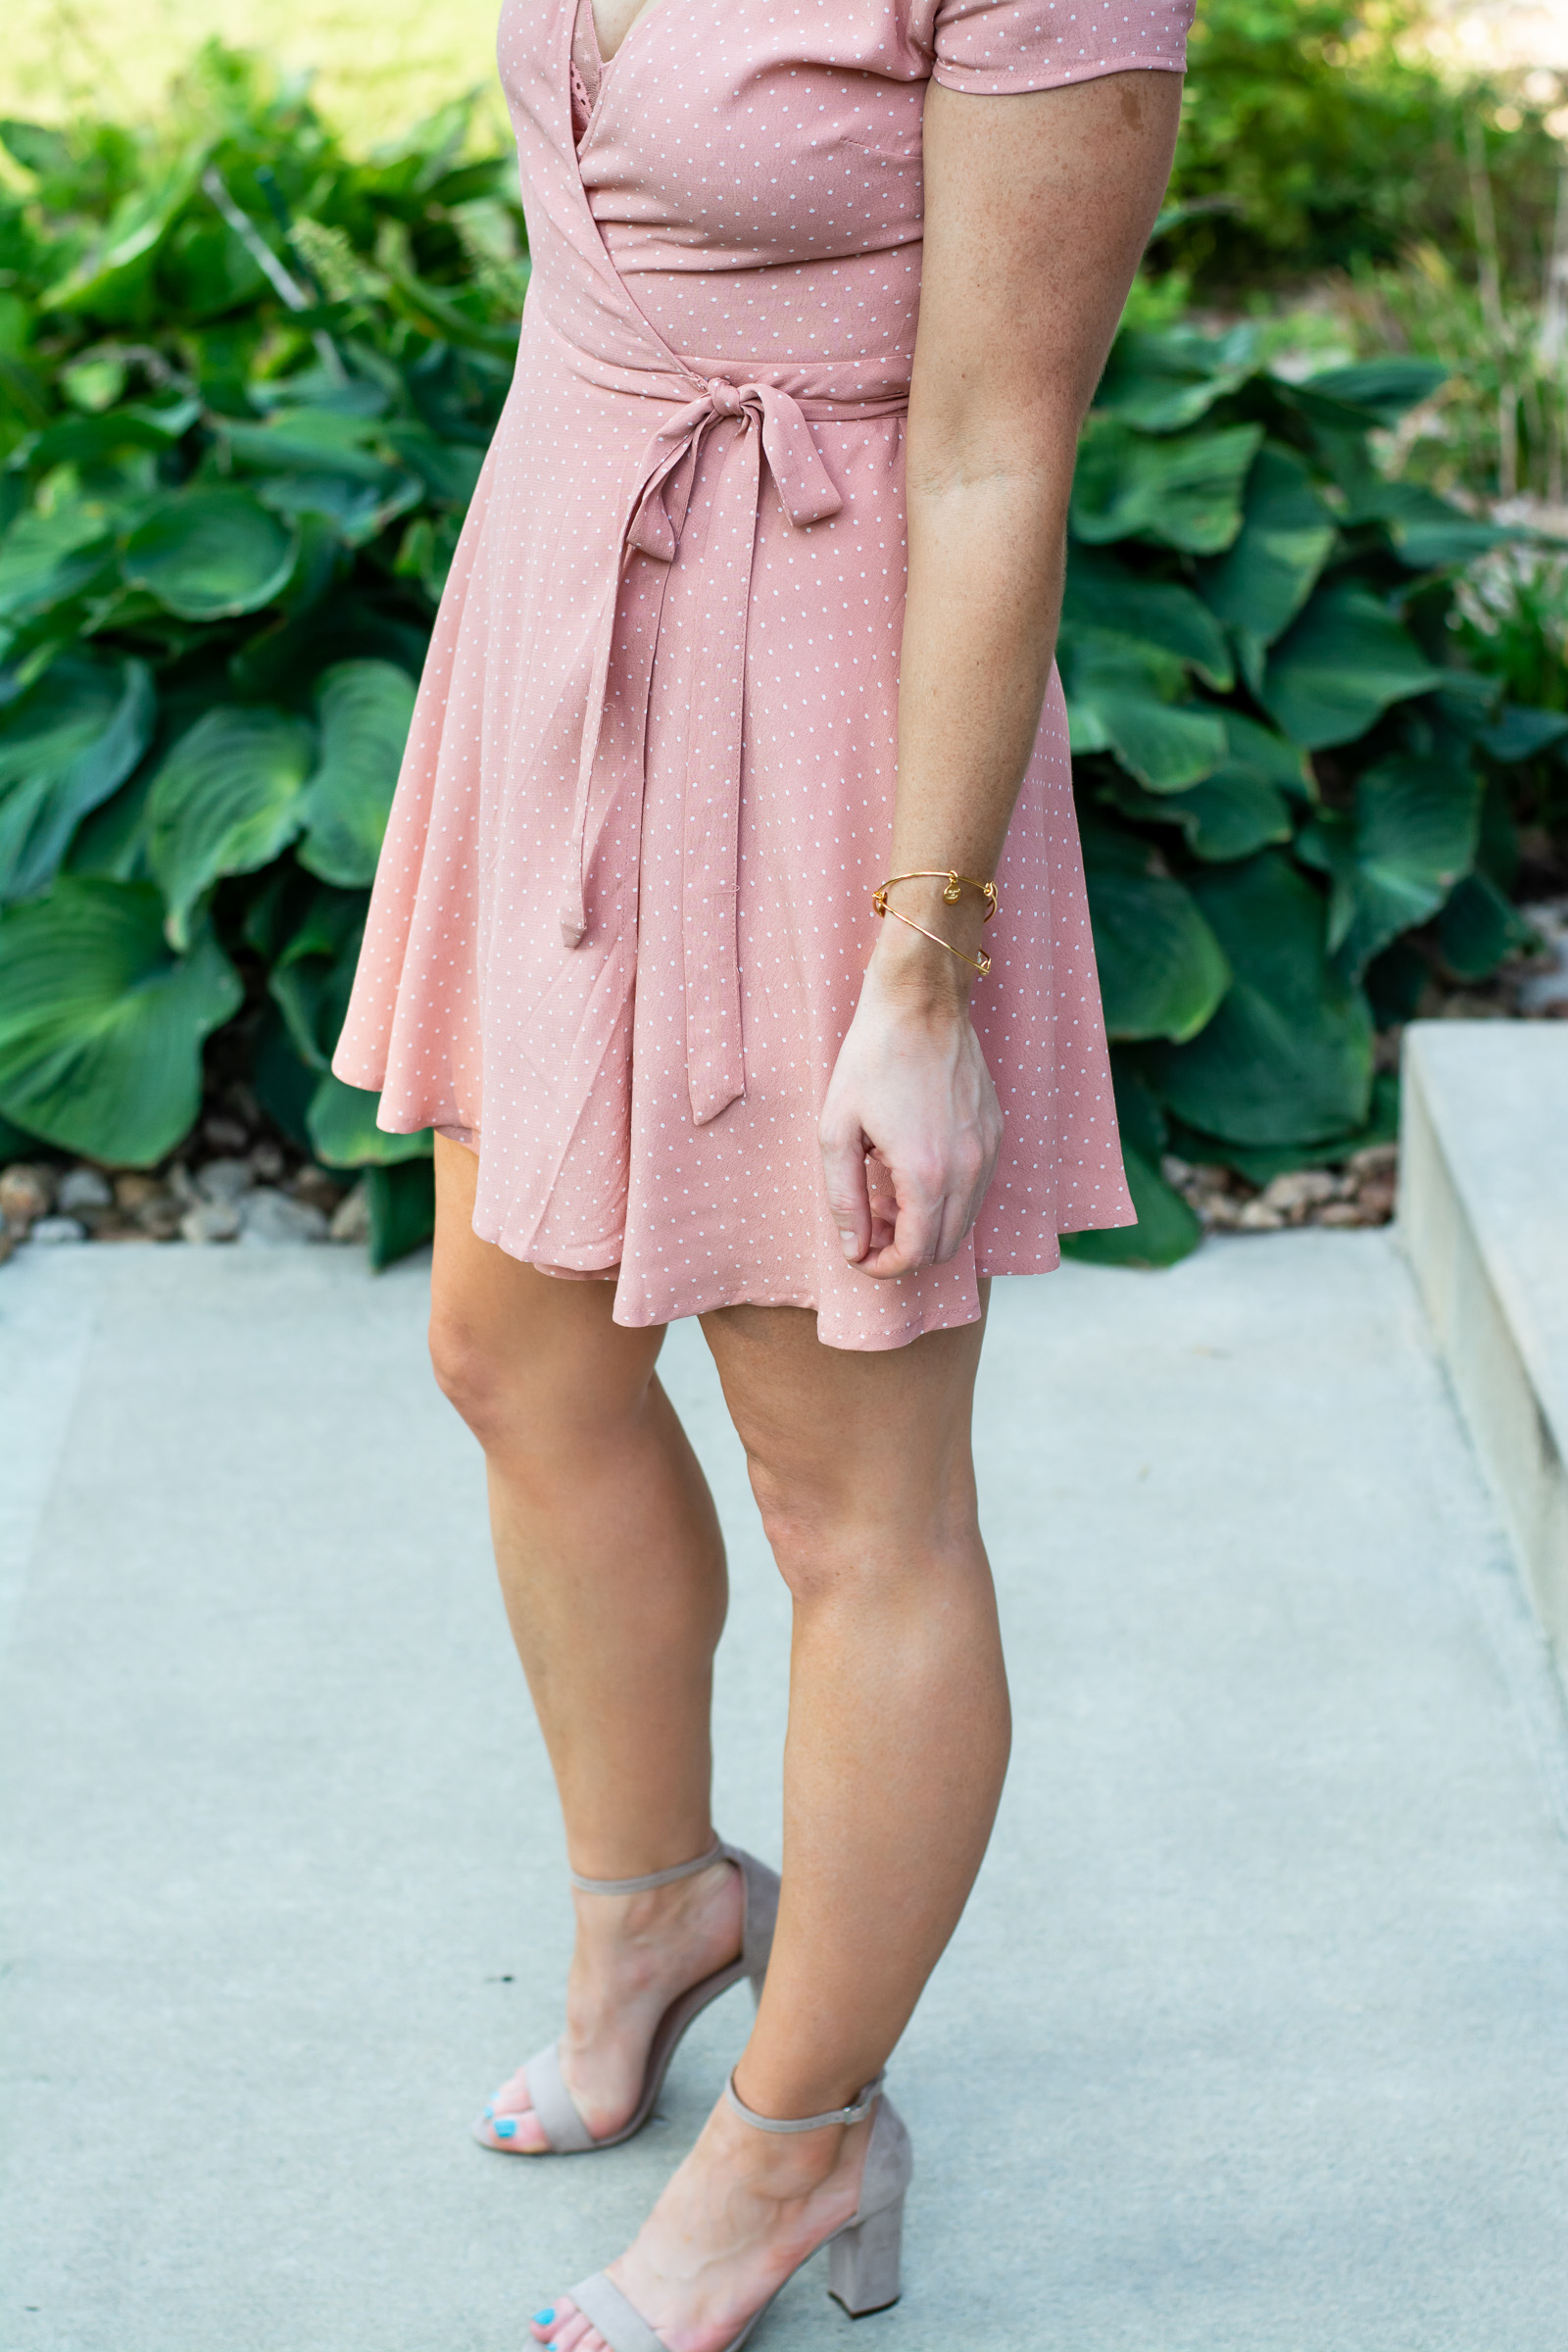 Blush Pink Polka Dot Dress. | Ashley from LSR